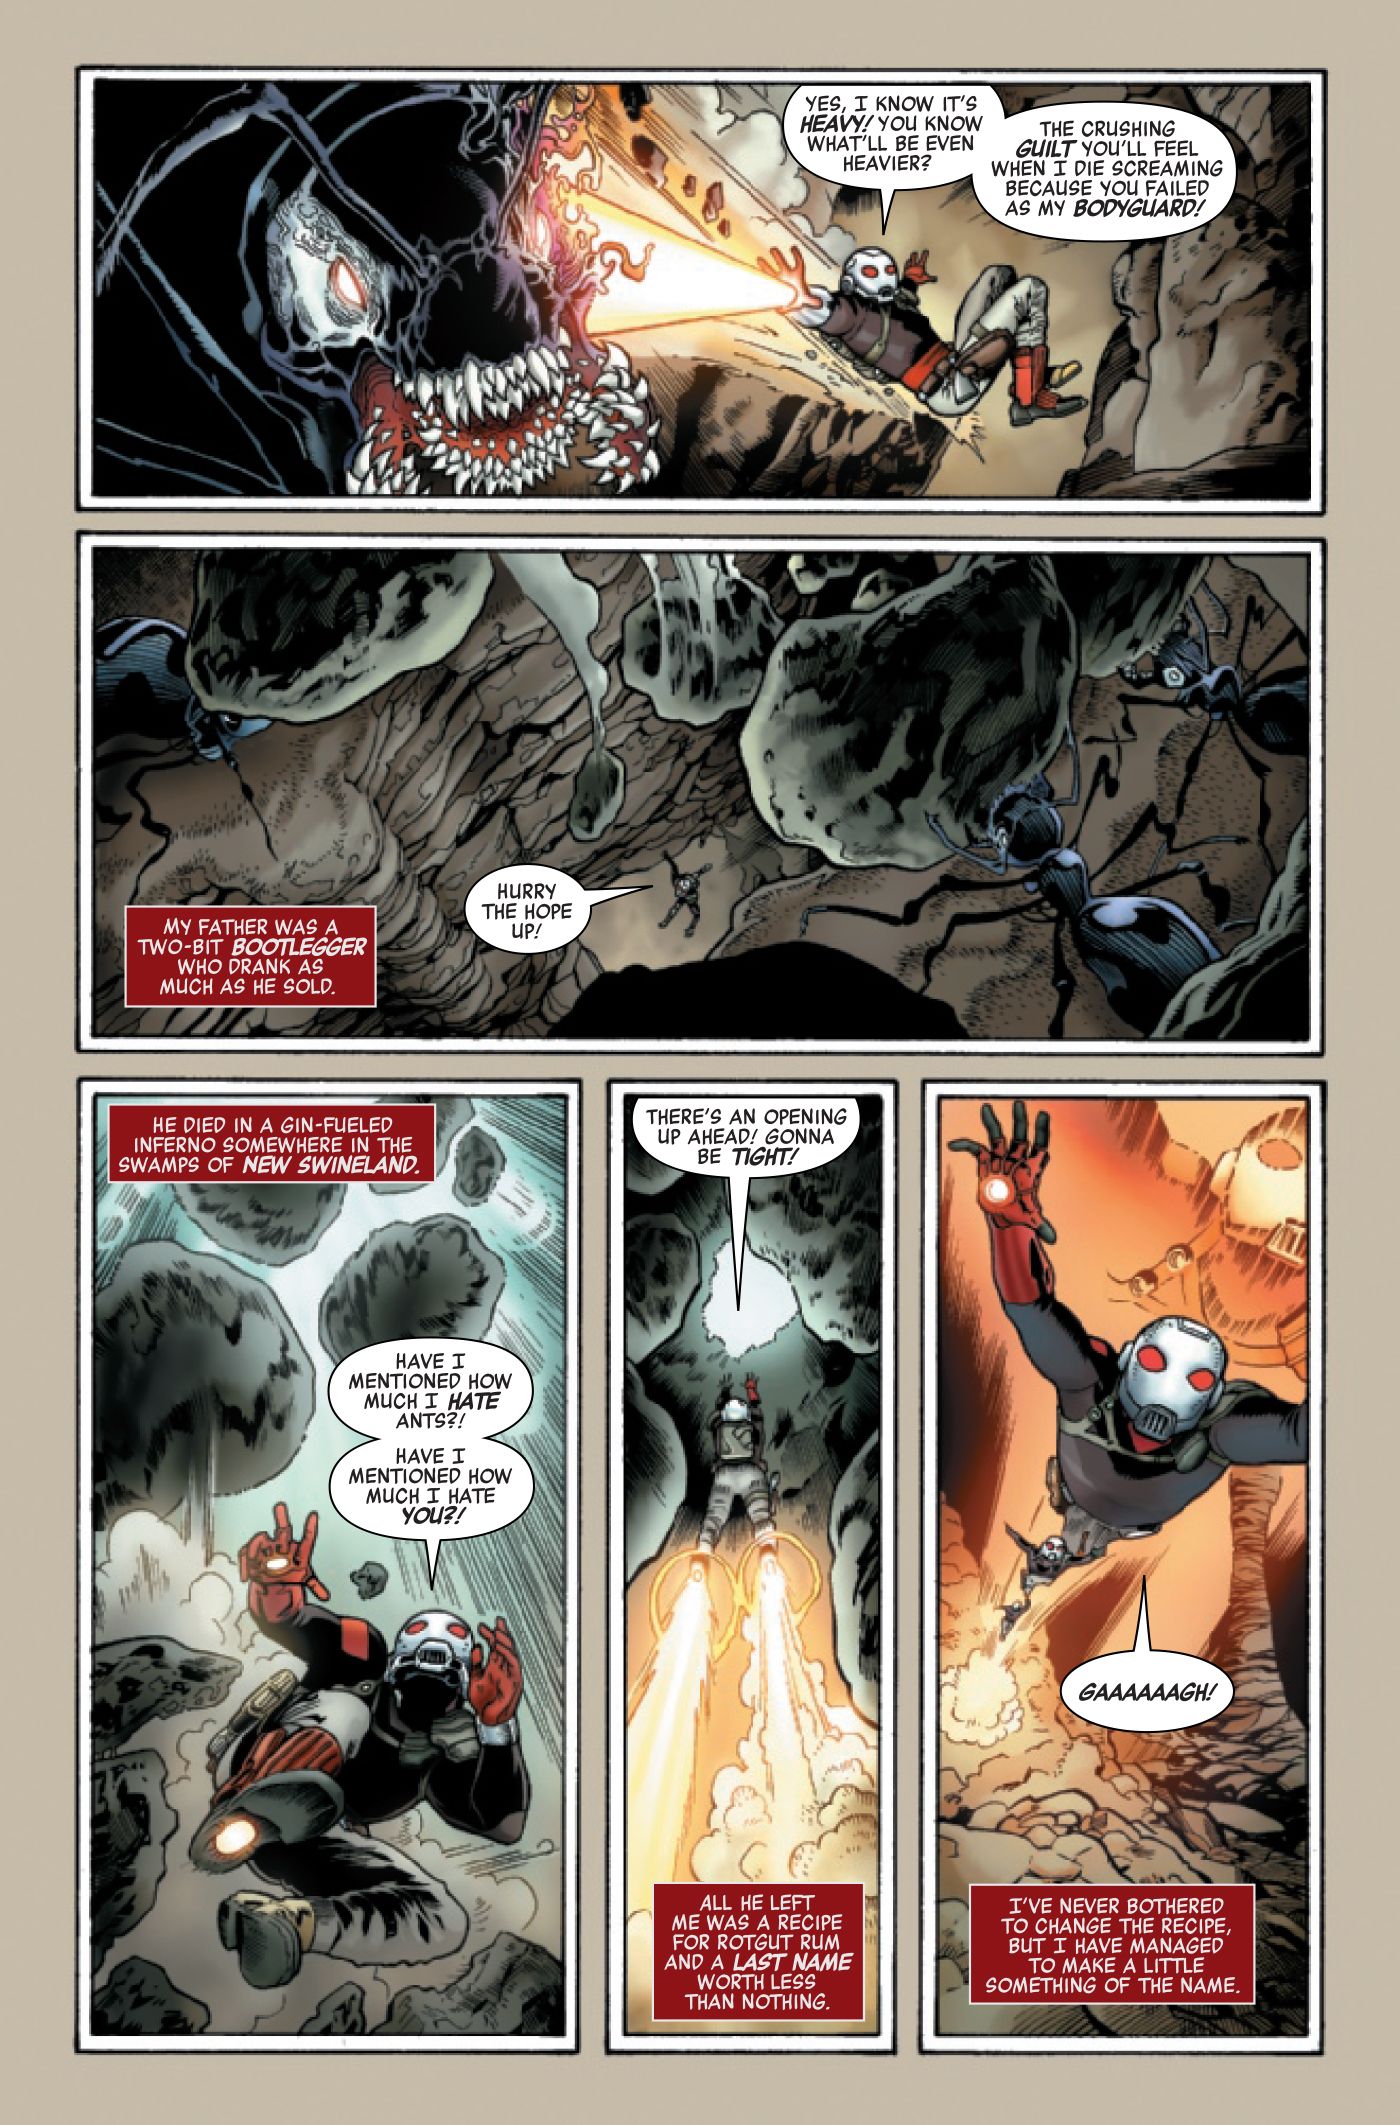 Tony Stark's Ant-Man suit still has flight and repulsor capabilities.